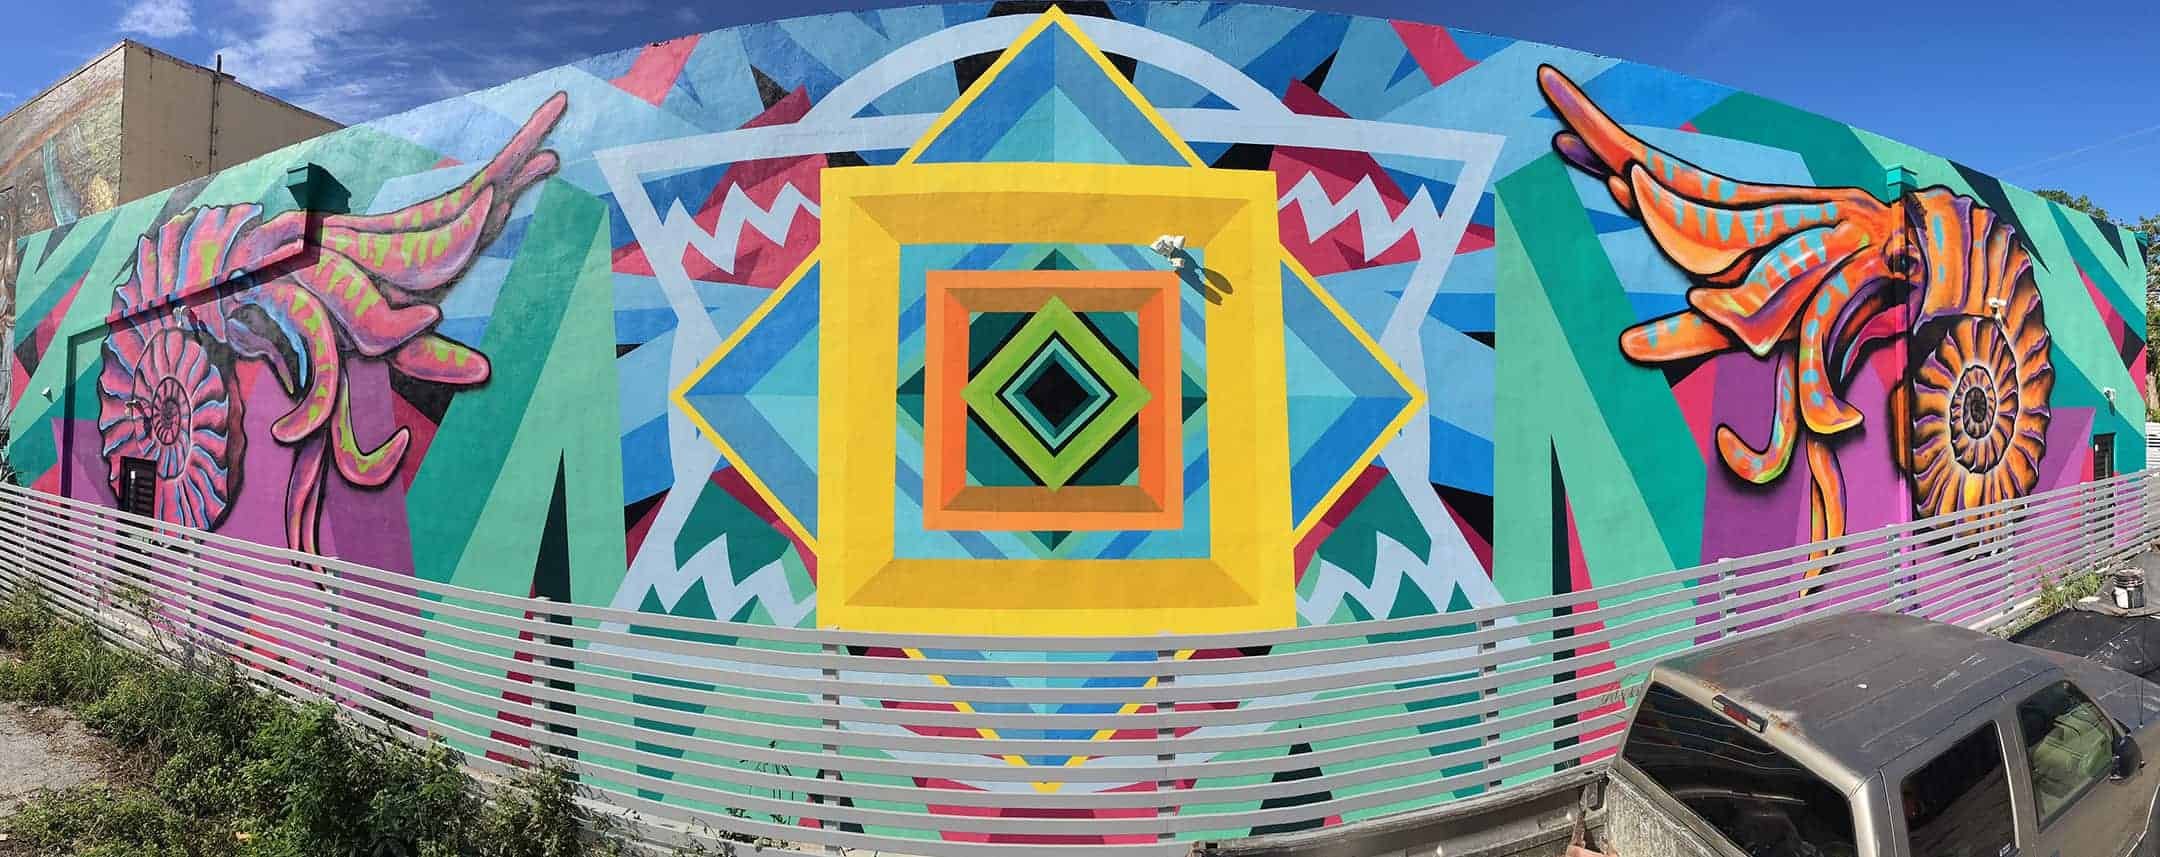 Street Art. Wynwood Walls, Miami, Art Basel, Murals, Kobra Paint, Art district, Jason T. Graves